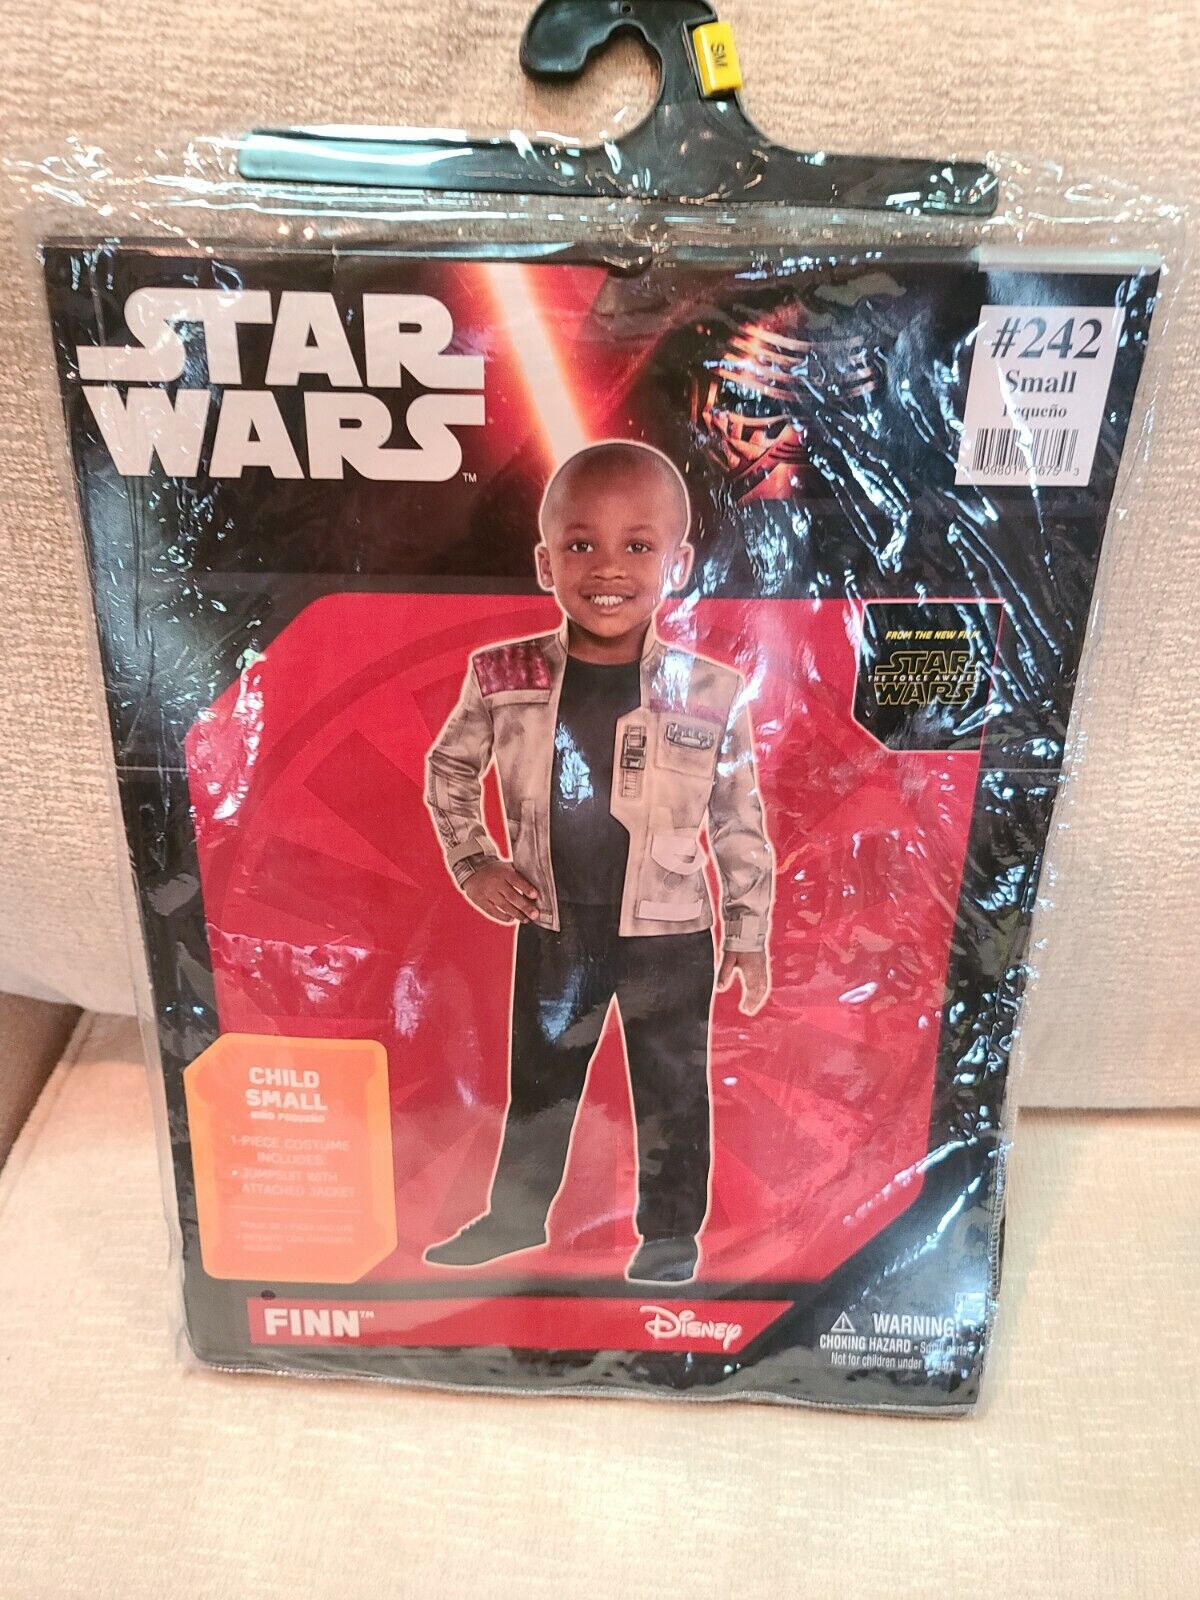 Star Wars The Force Awakens Costume - Finn. Child Small.